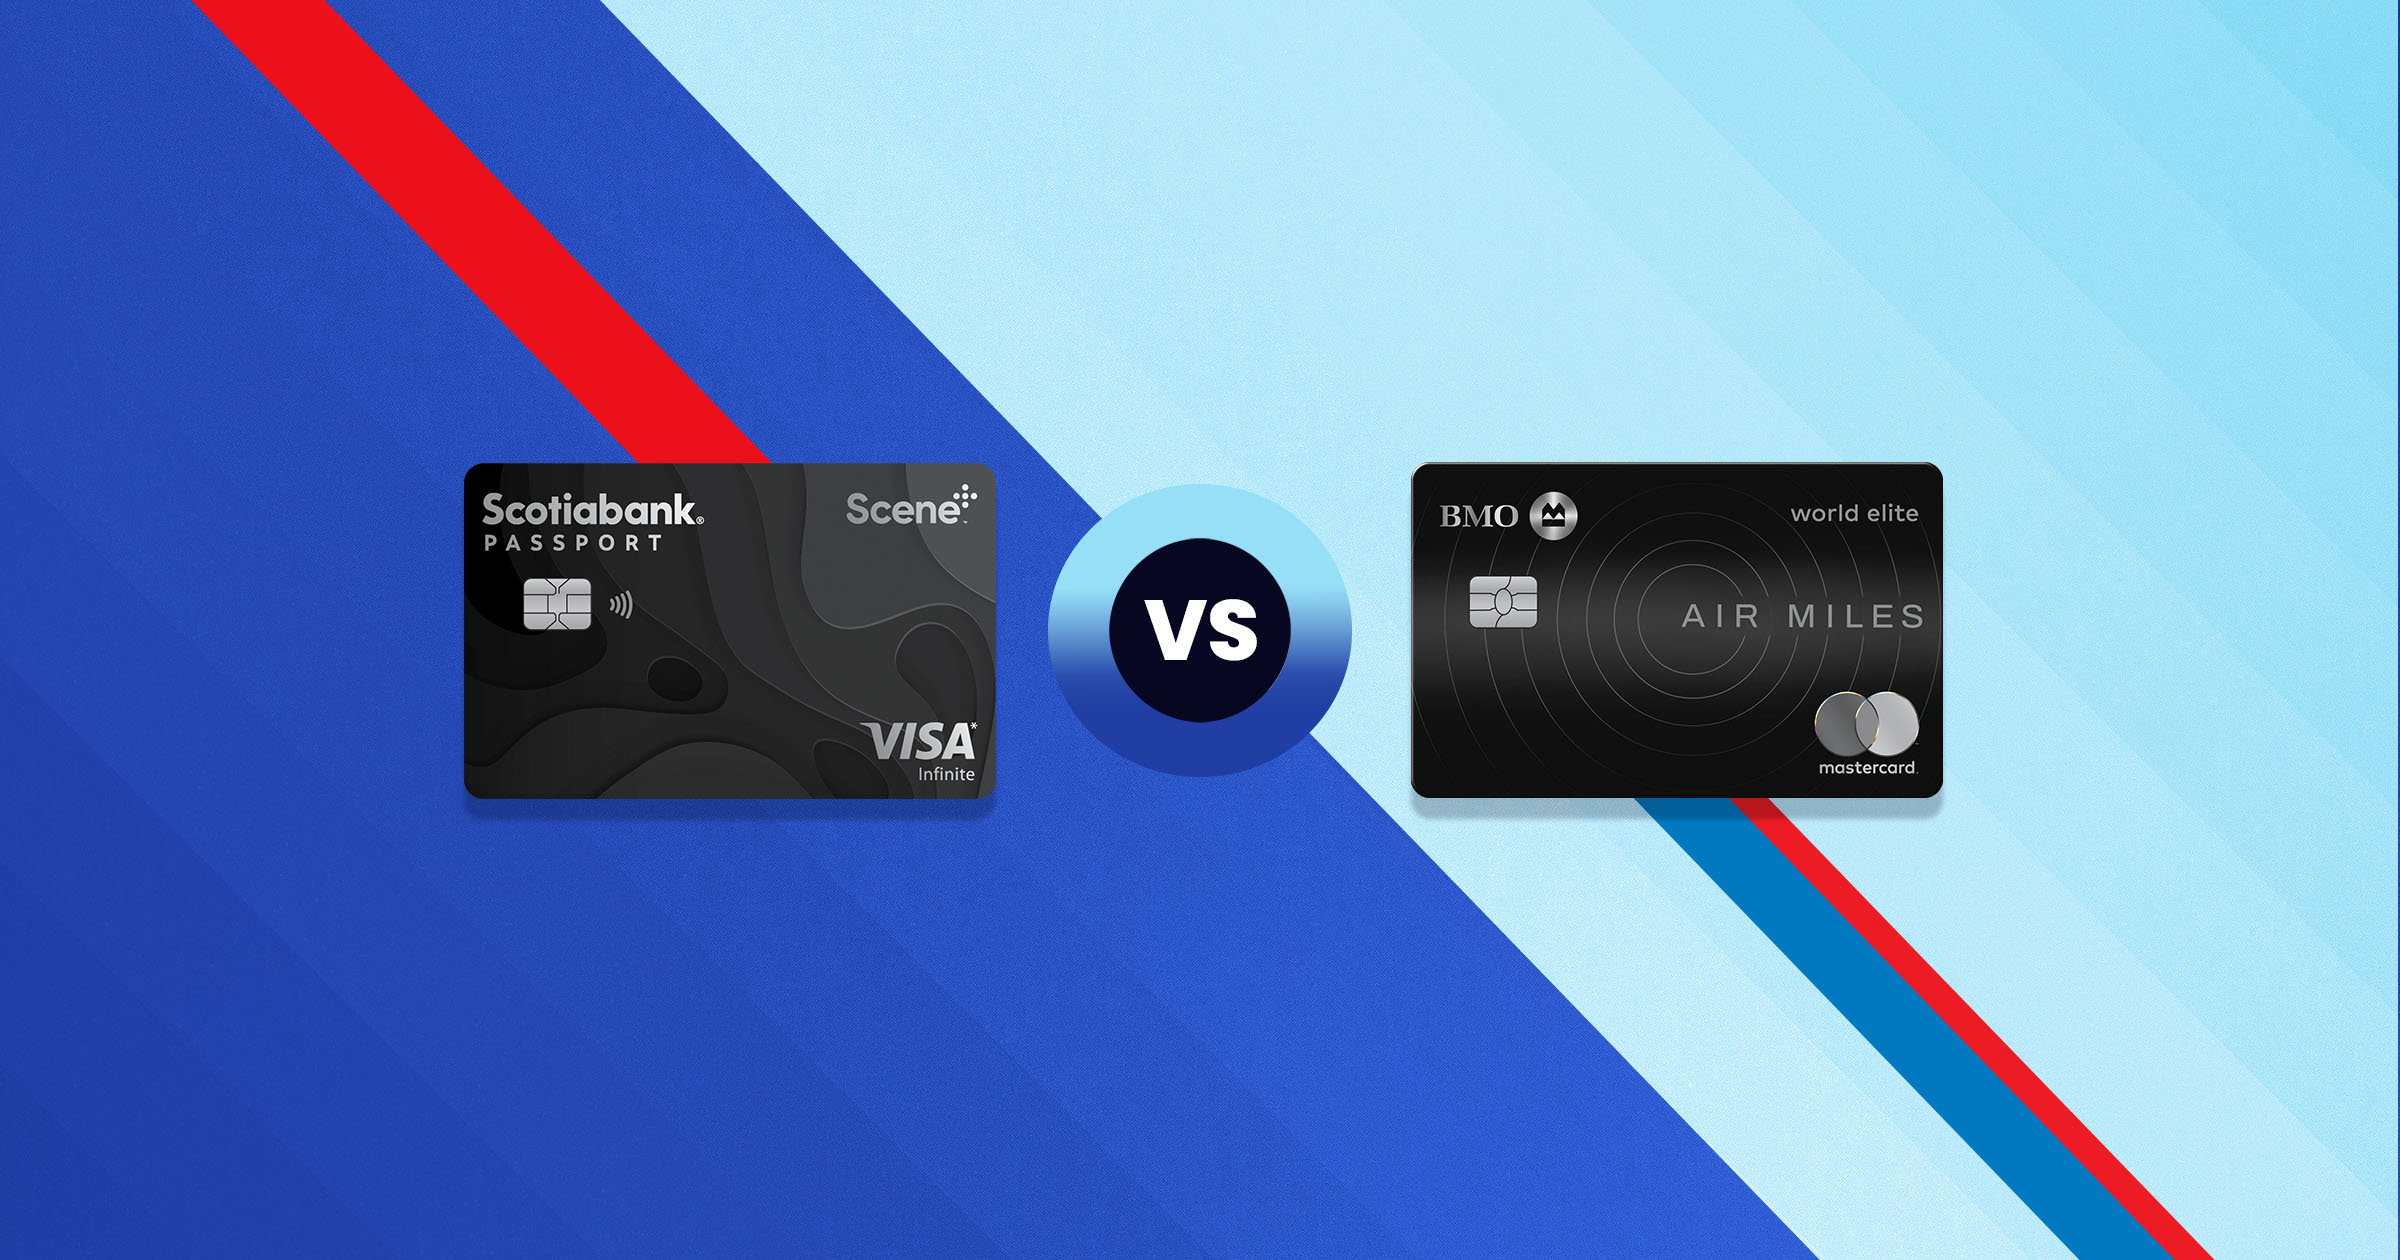 Scotiabank Passport Visa Infinite Card vs. BMO AIR MILES World Elite Mastercard